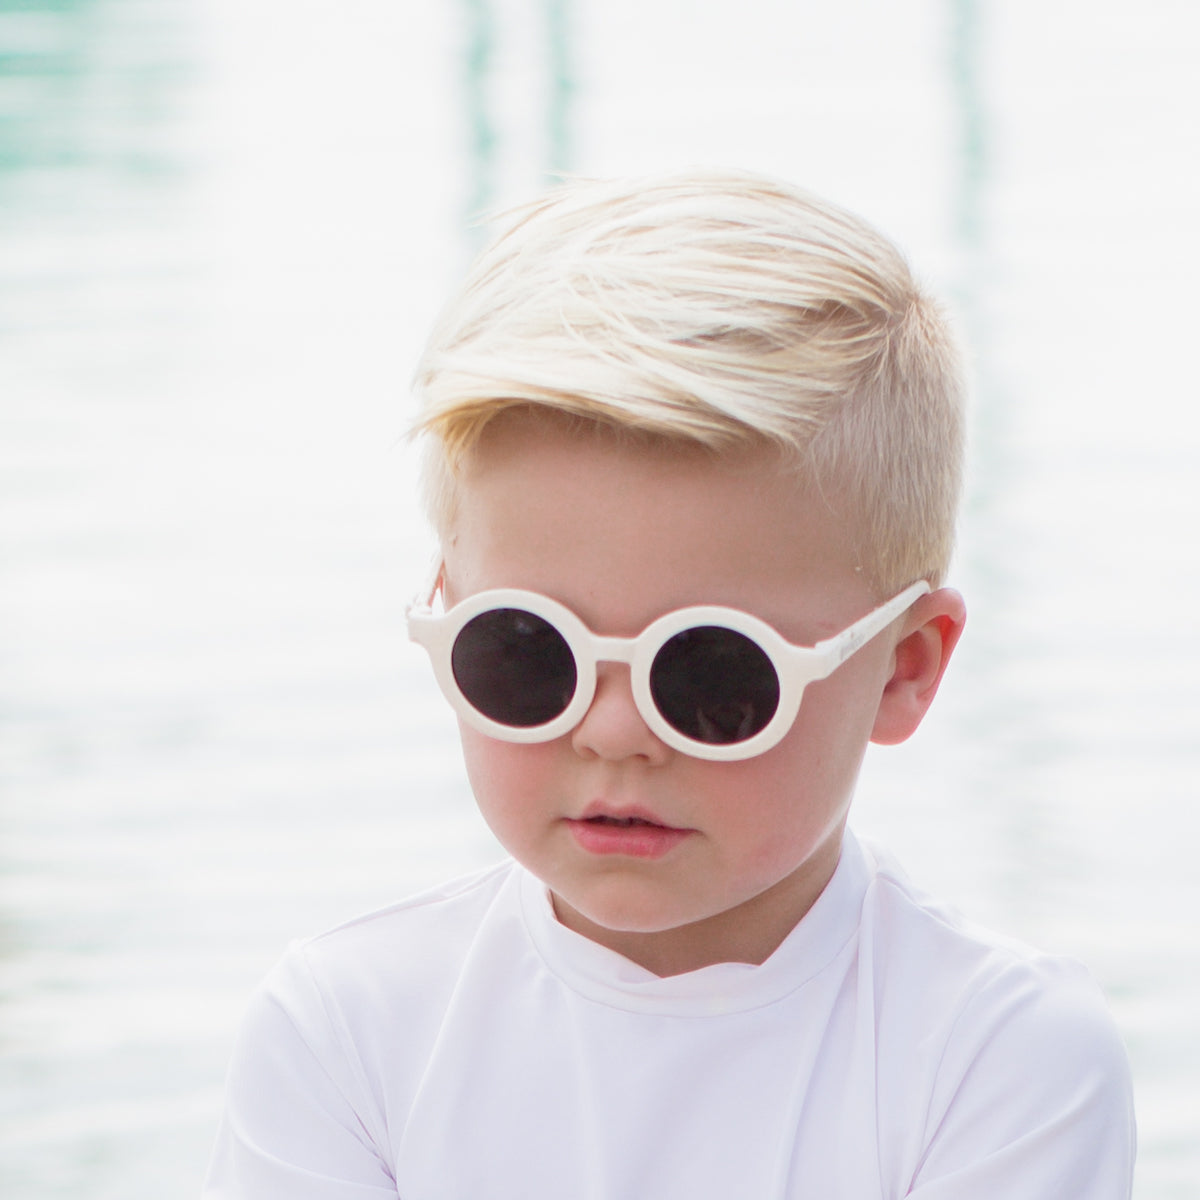 New Flexible, Resistant & Polarized UV 400 Kids Sunglasses Black MKS — MKS  Miminoo